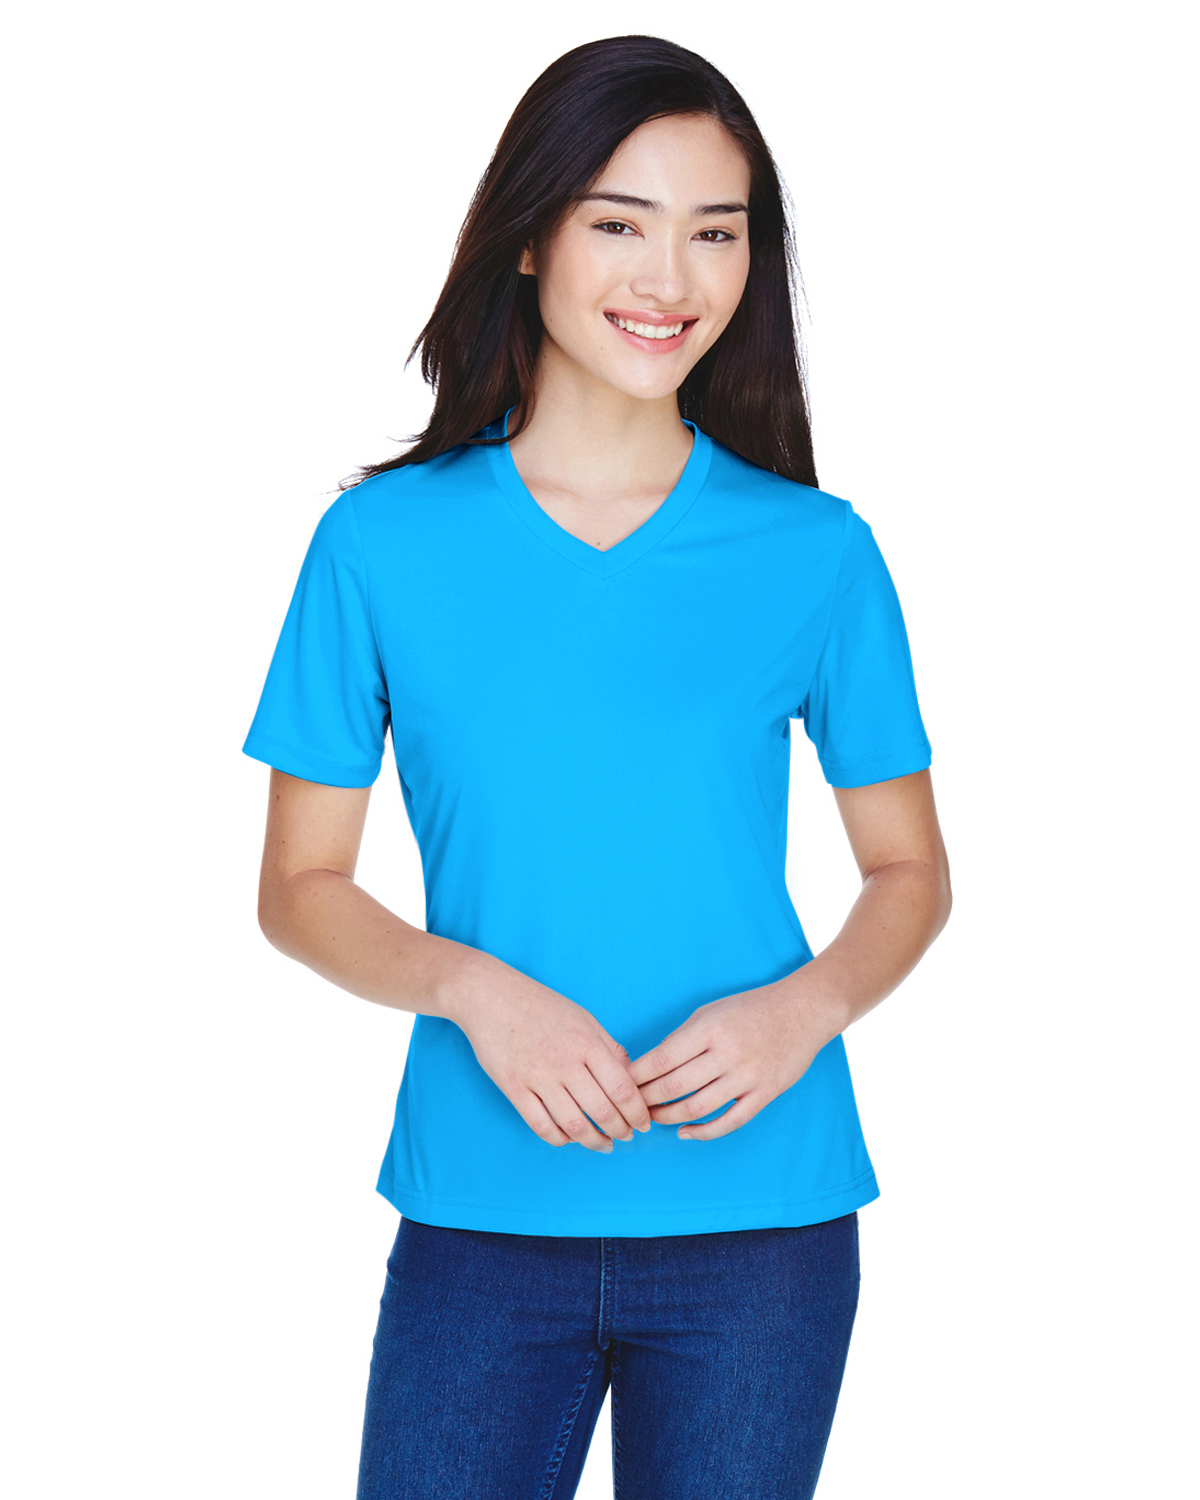 The V-Neck T-Shirt in Blue · Teym